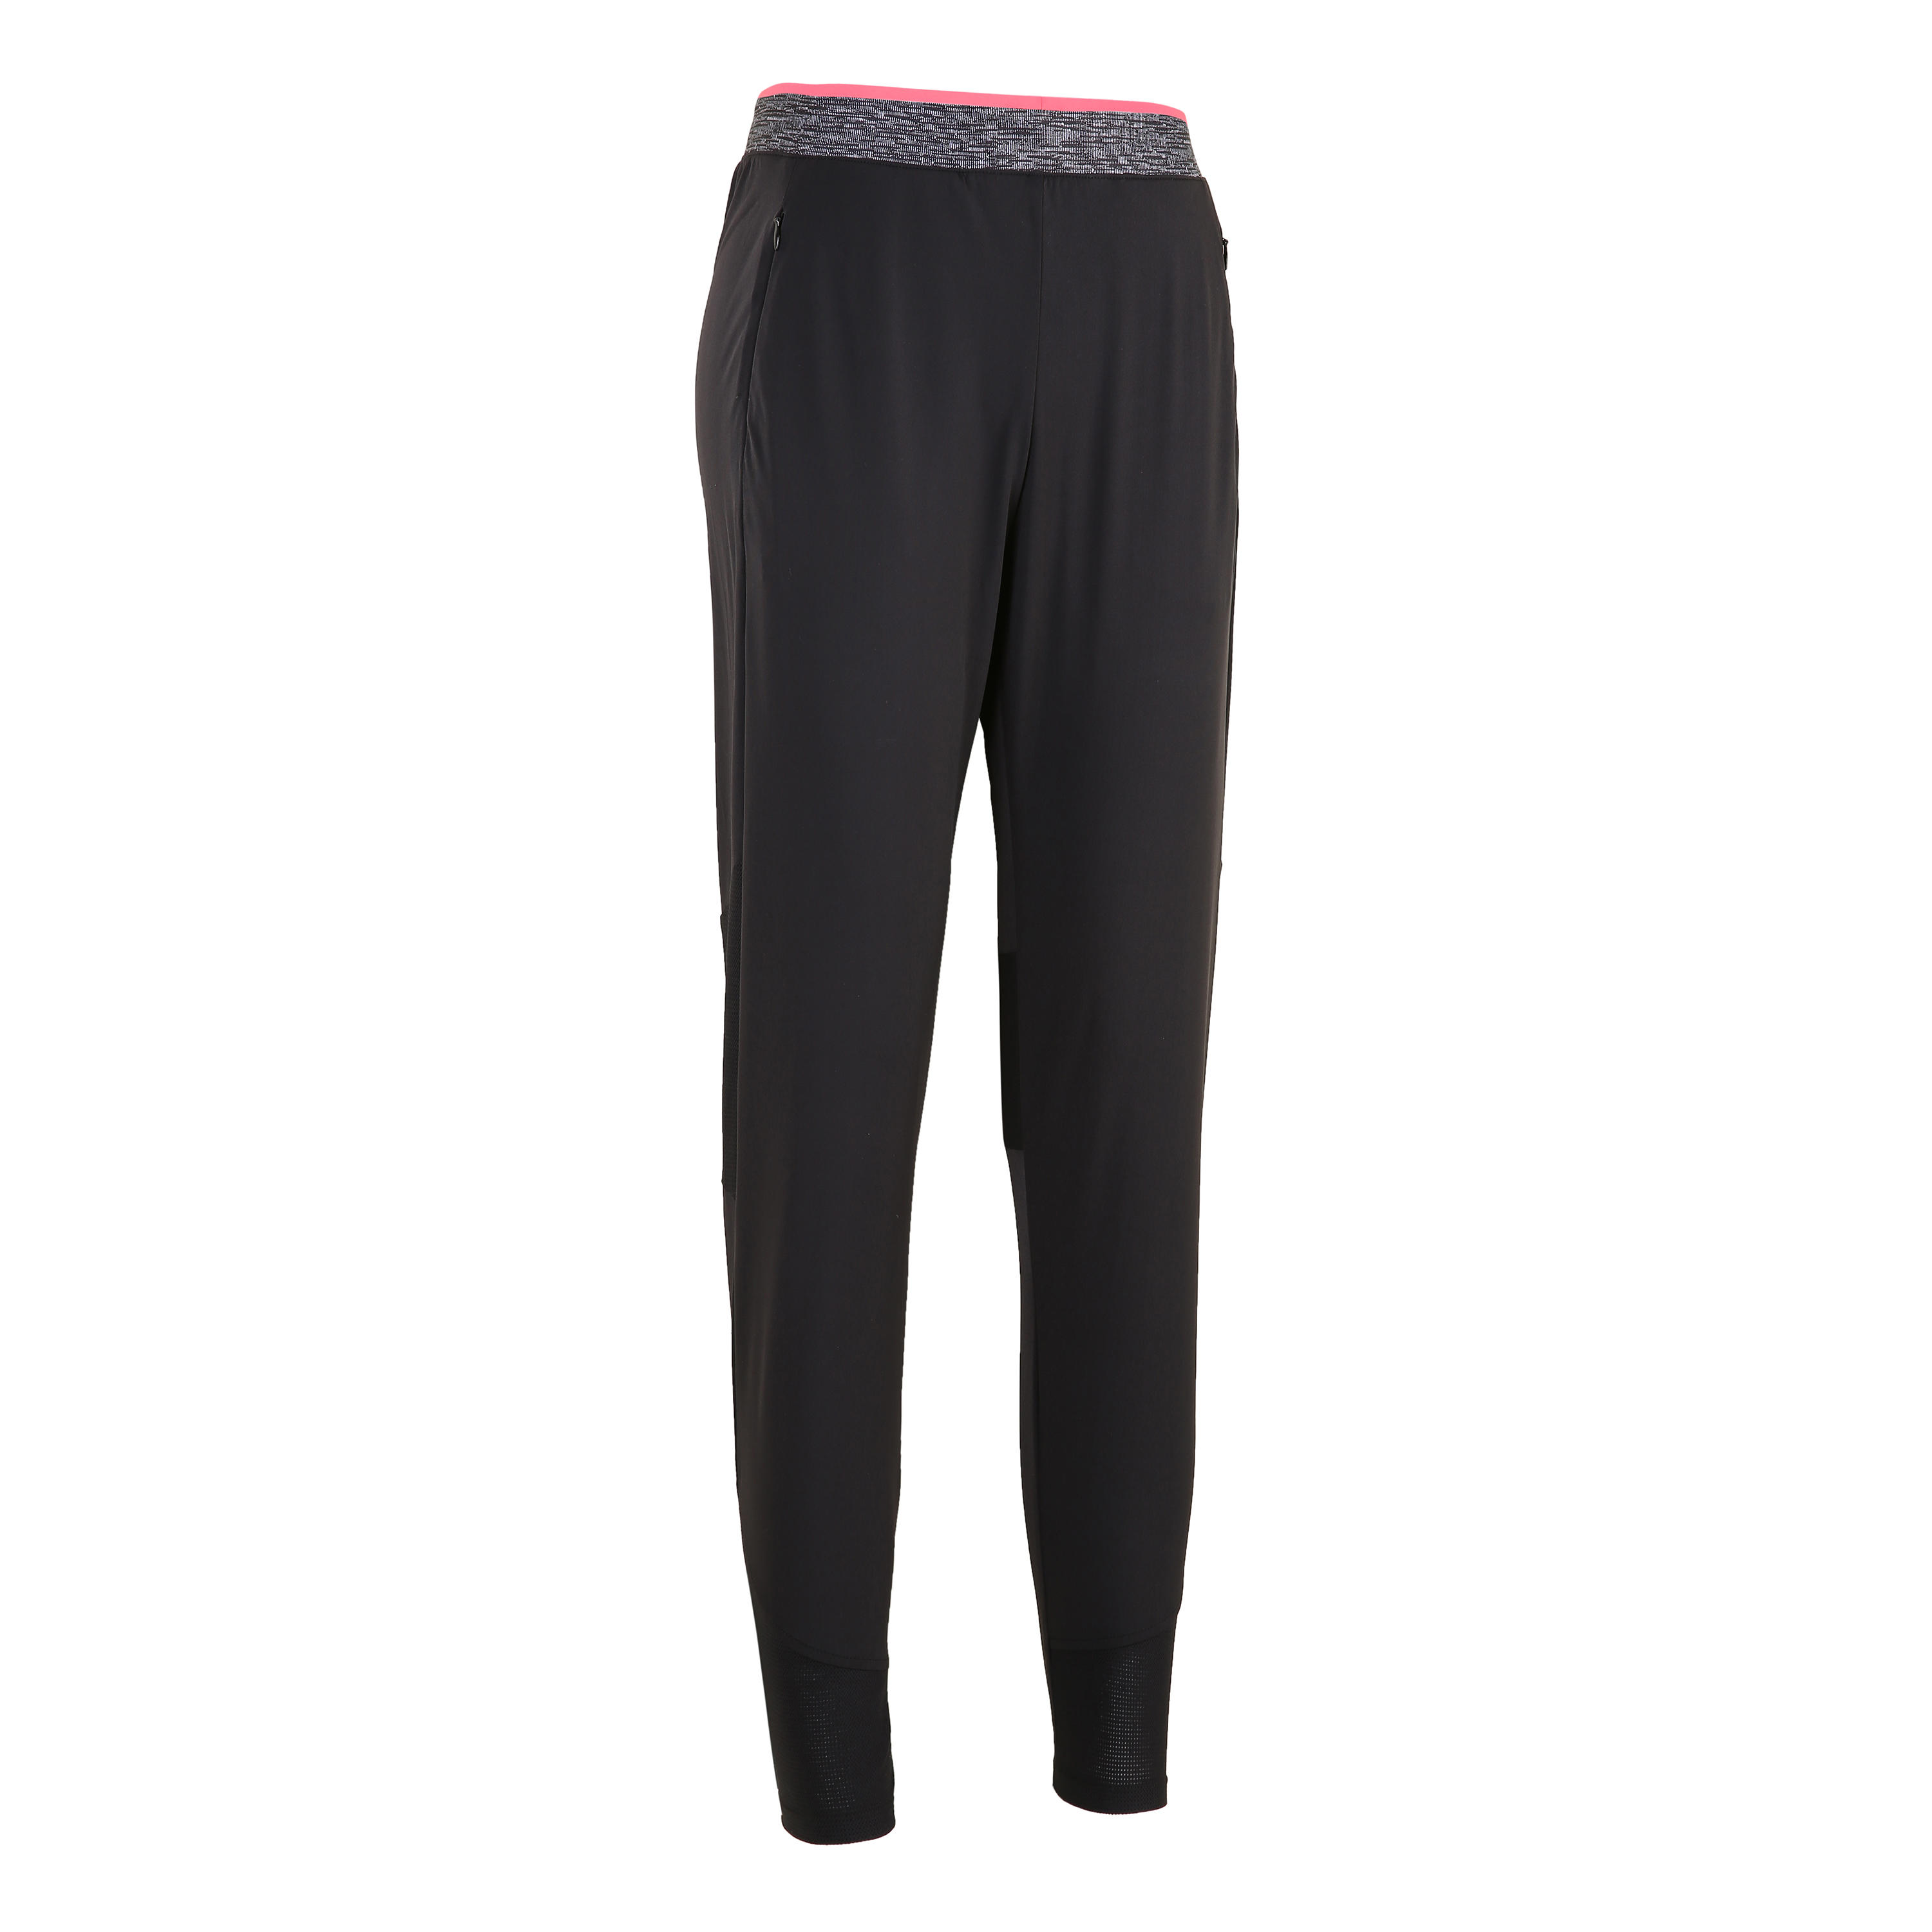 Decathlon - Domyos 7/8 Short Stretchy Cotton Fitness Leggings, Women's -  Walmart.com